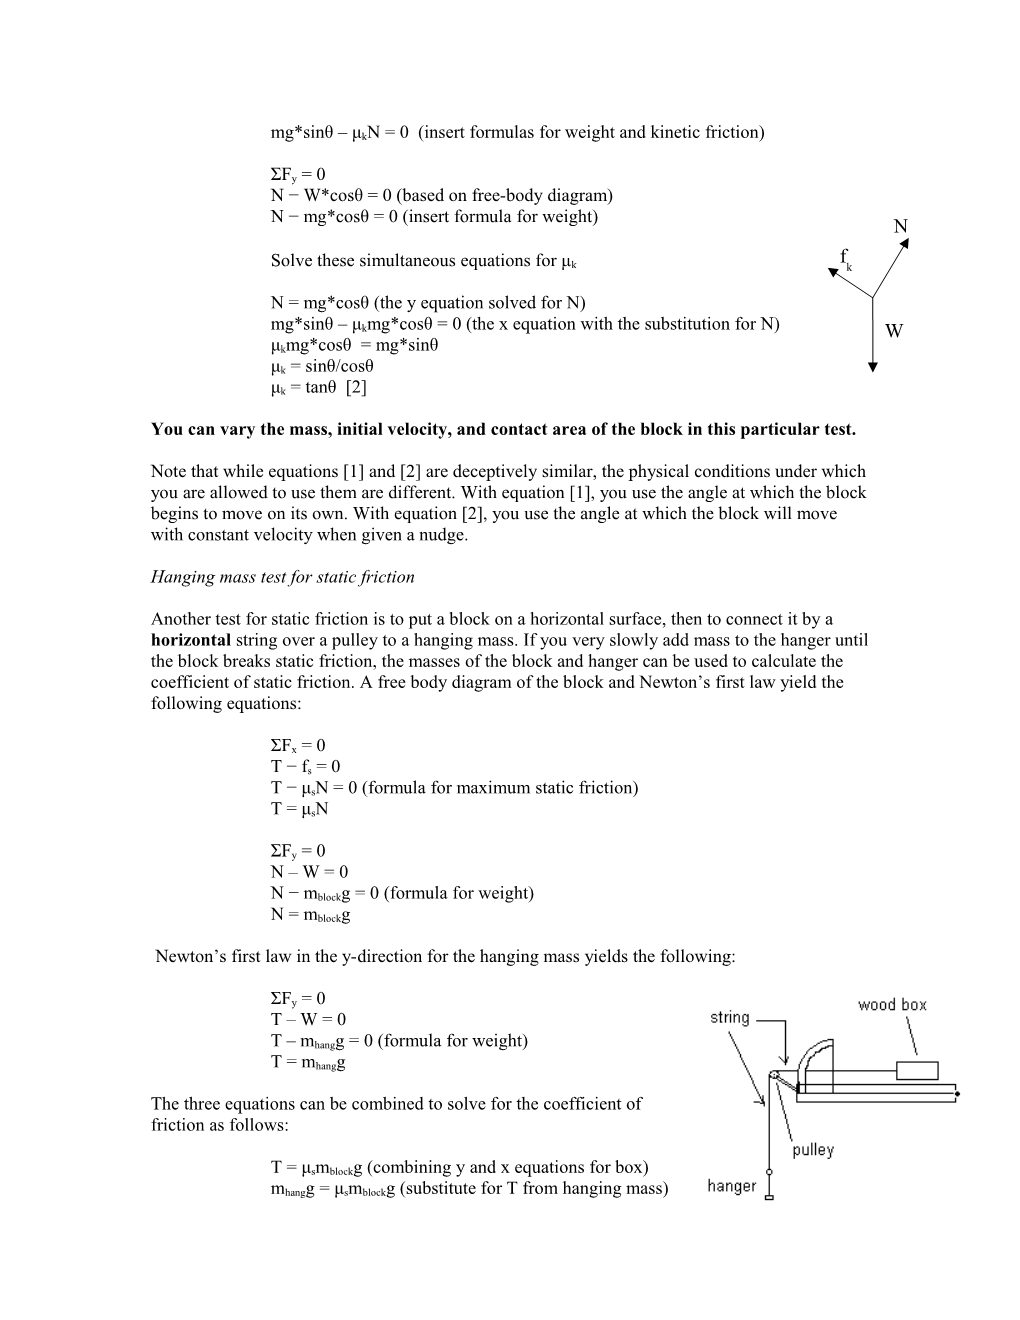 General Physics Measurement and Error Fall